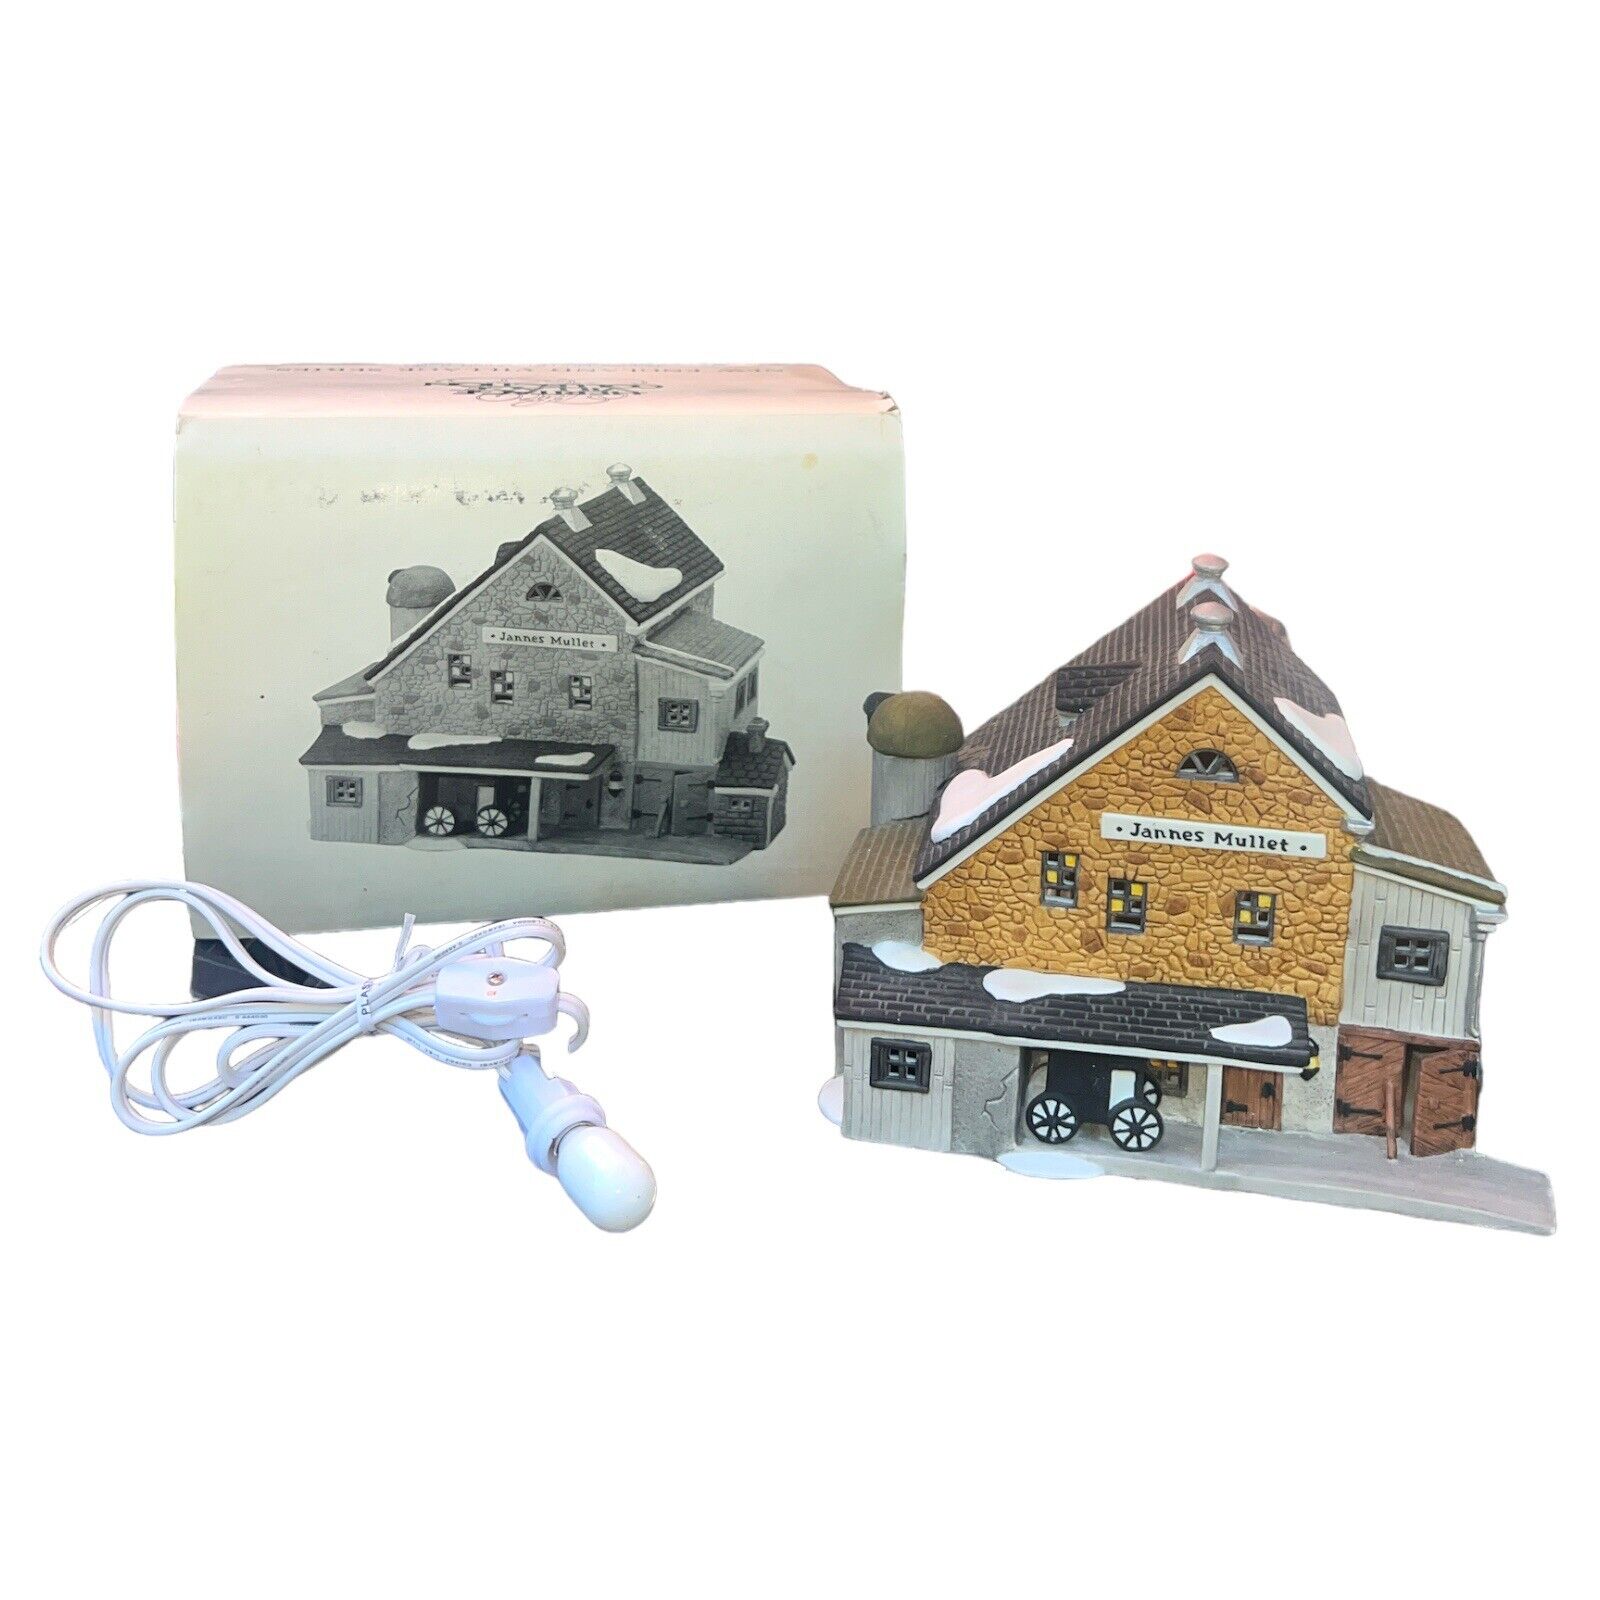 Dept 56 New England Village Series Jannes Mullet Amish Barn #5944-7 Box + Light